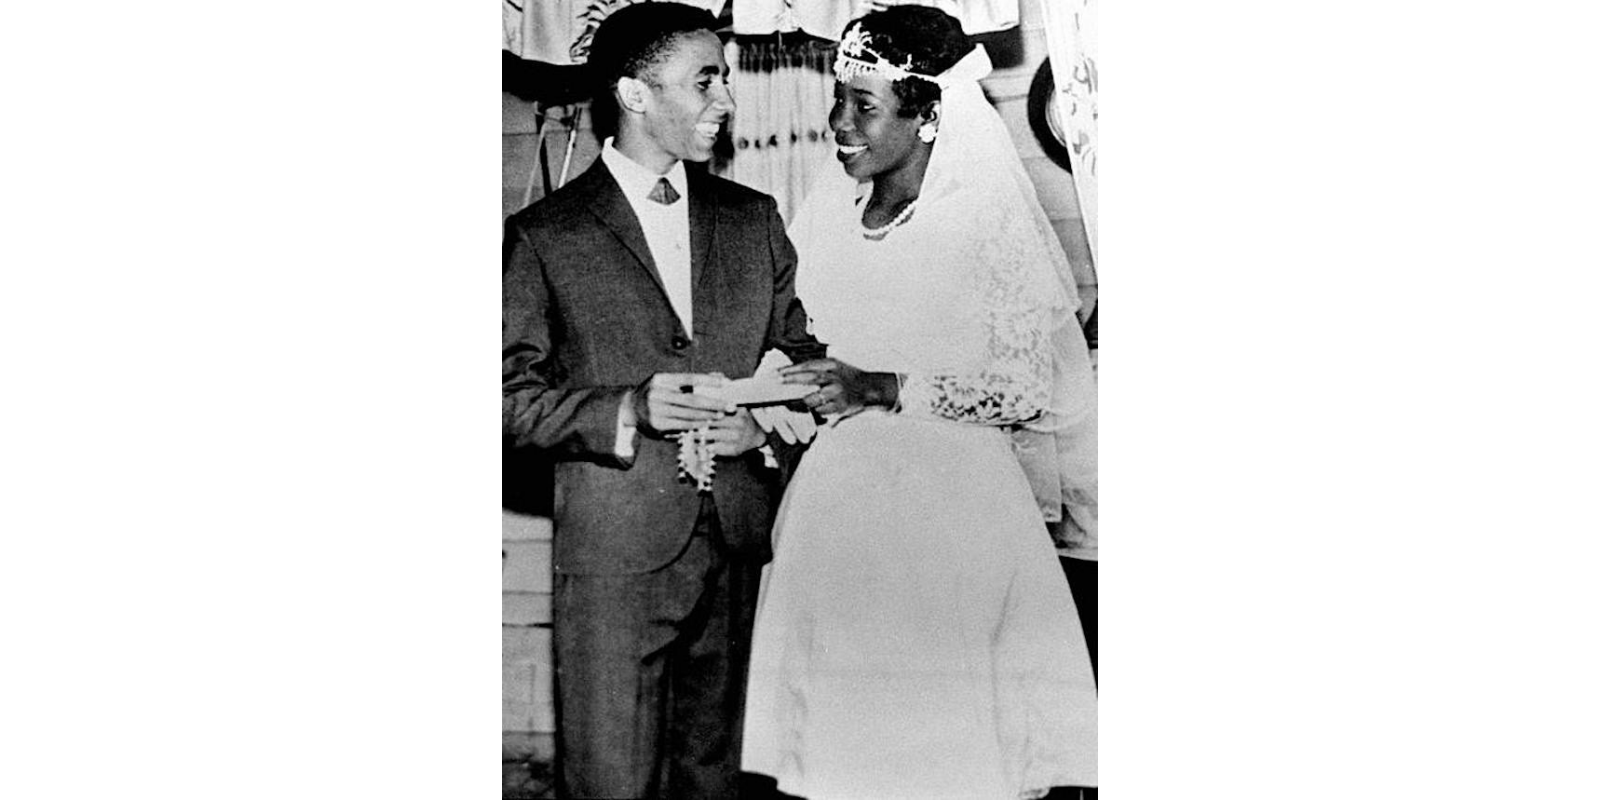 Mariage de Bob et Rita Marley